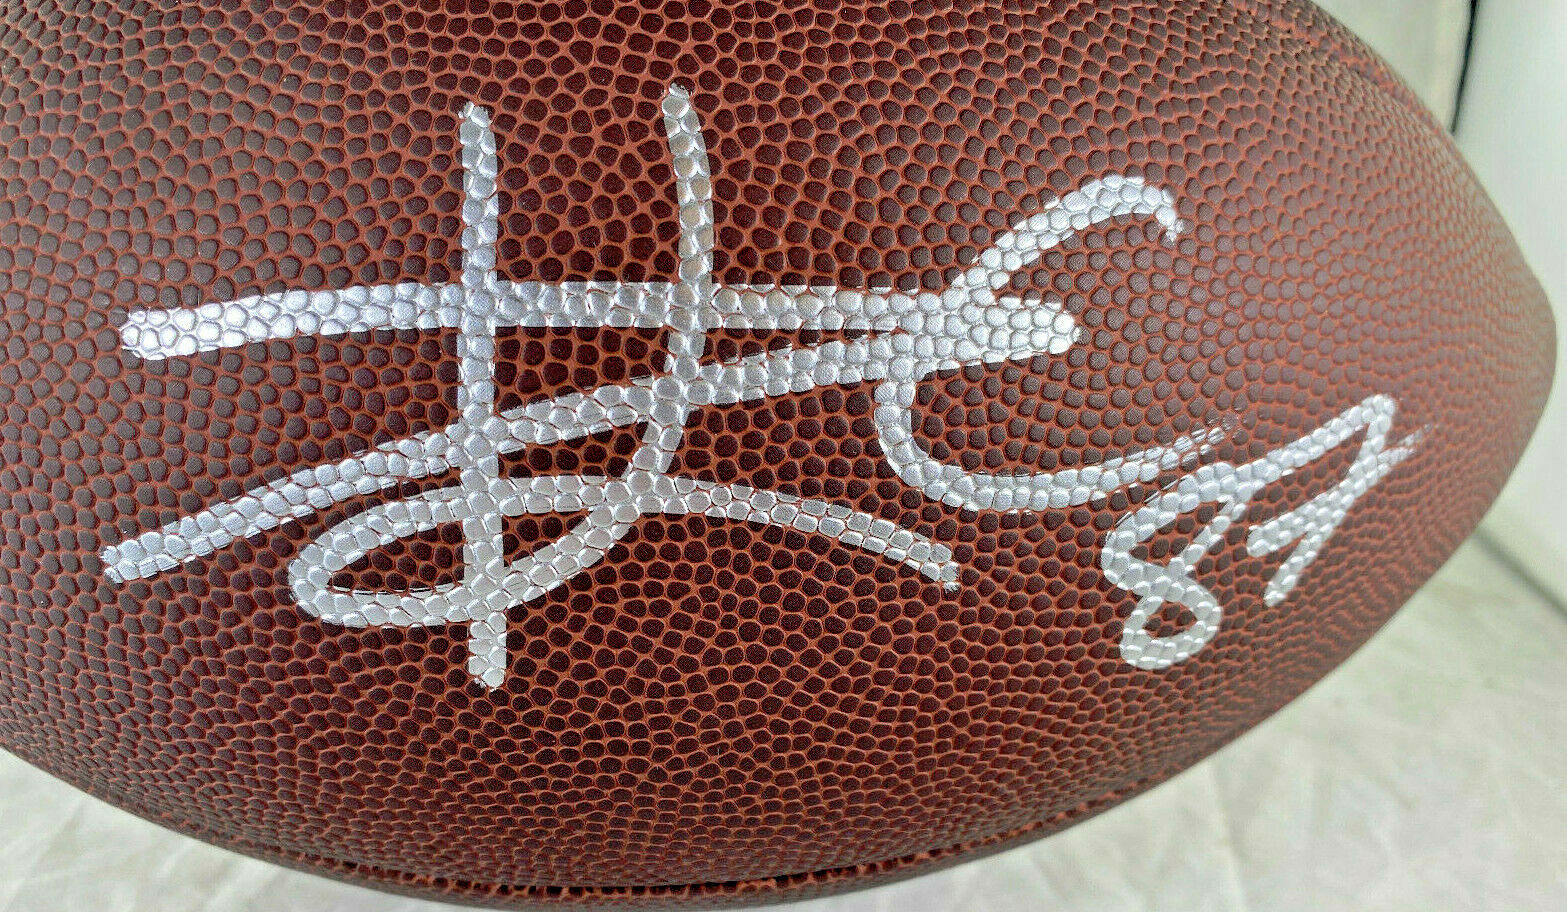 Travis Kelce / Autographed Full Size Wilson Brand Nfl Gold Logo Football / COA